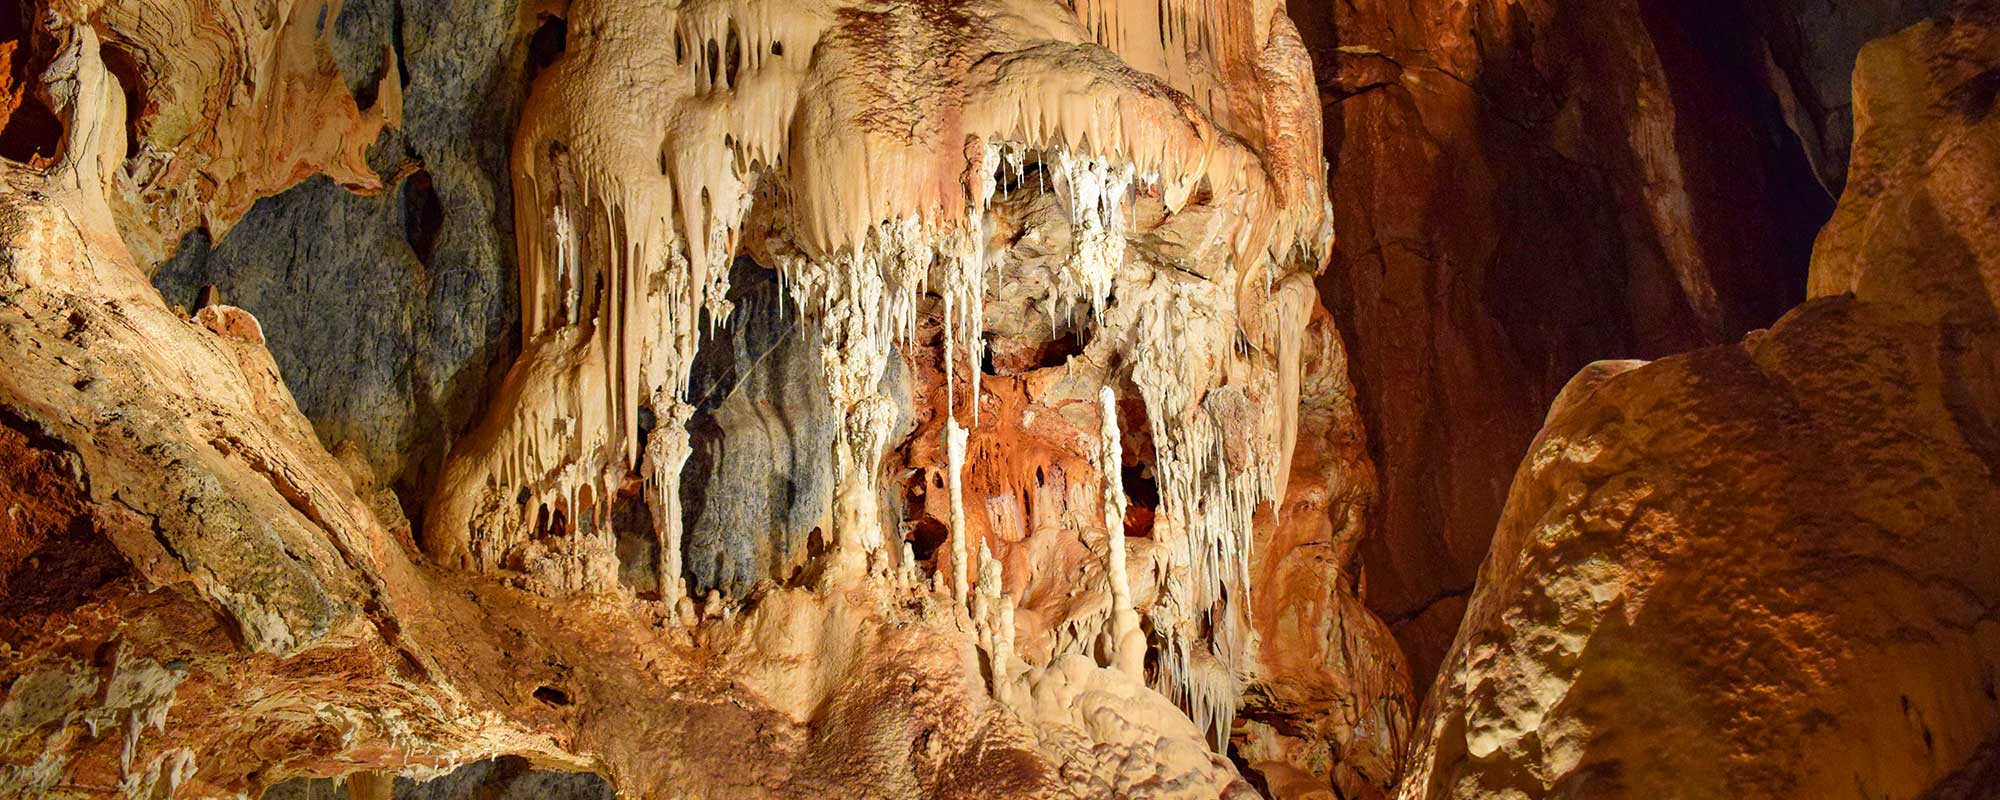 Chilligoe caves